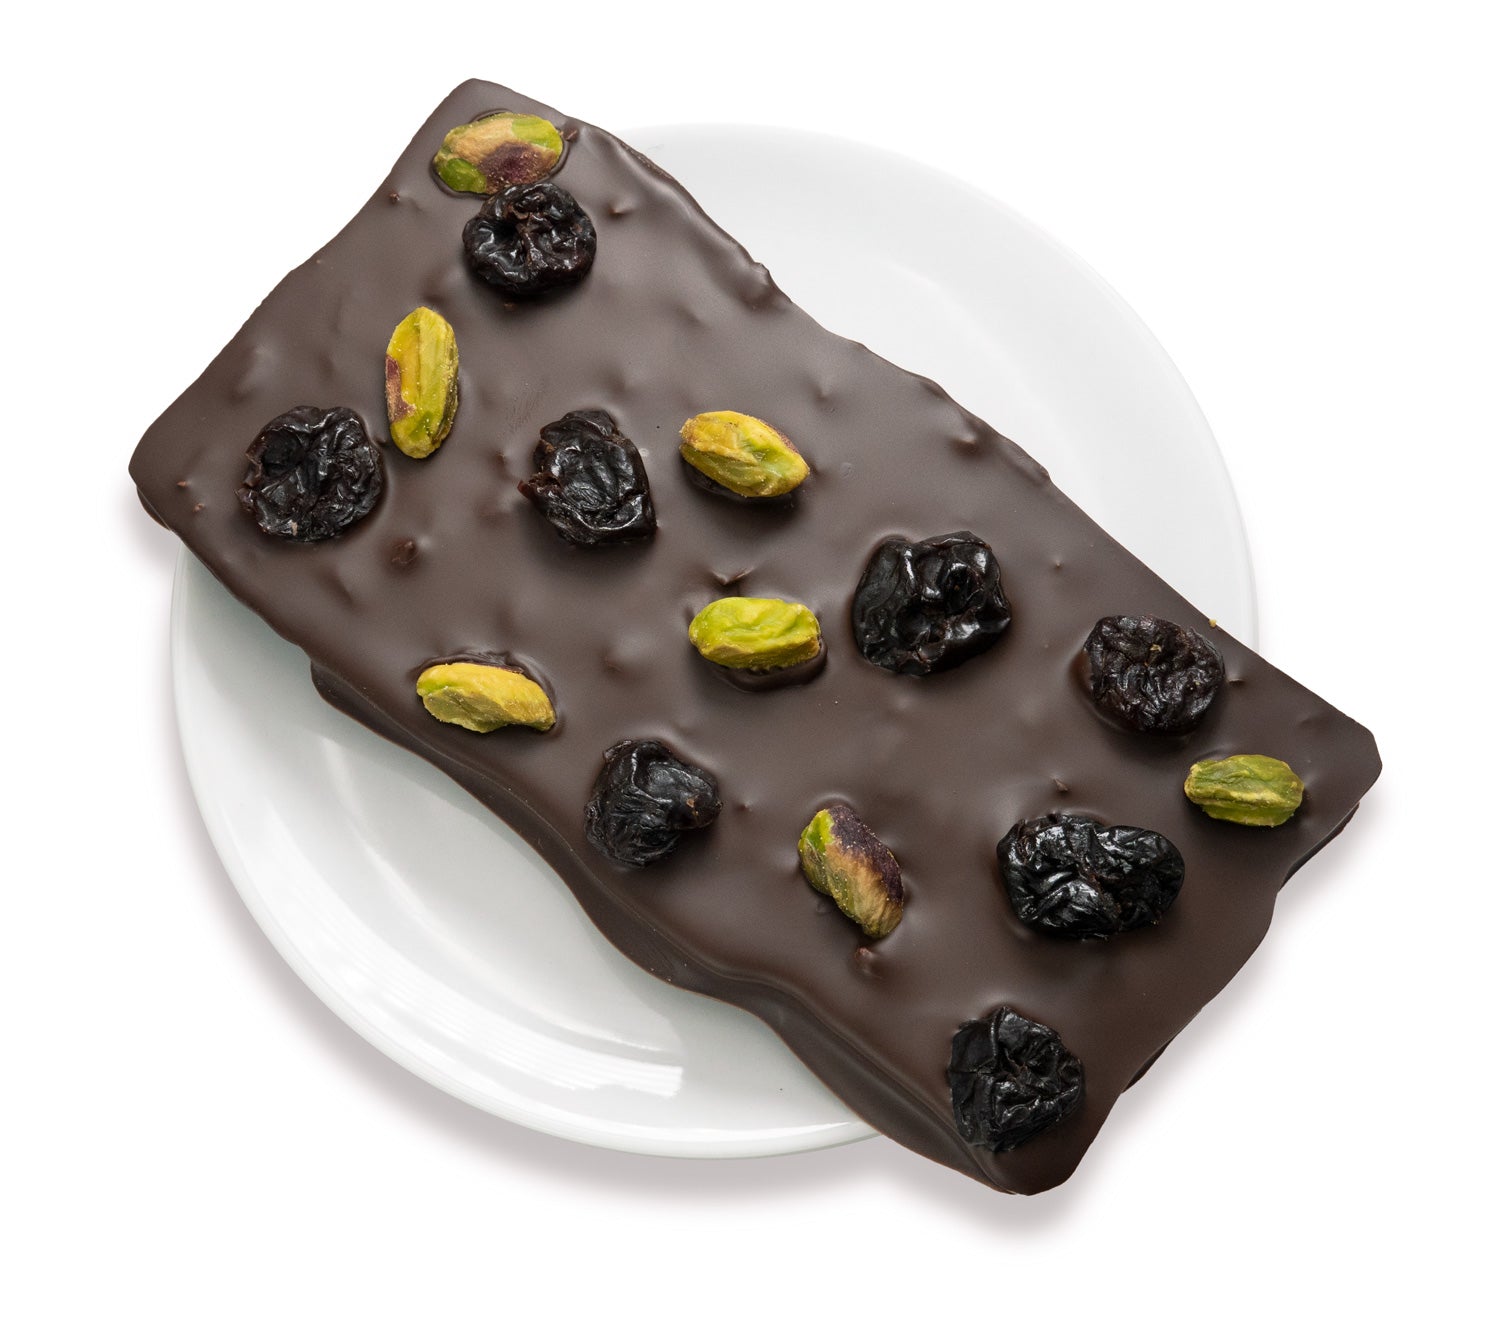 Vegan 70% dark chocolate bar with cherries and pistachios